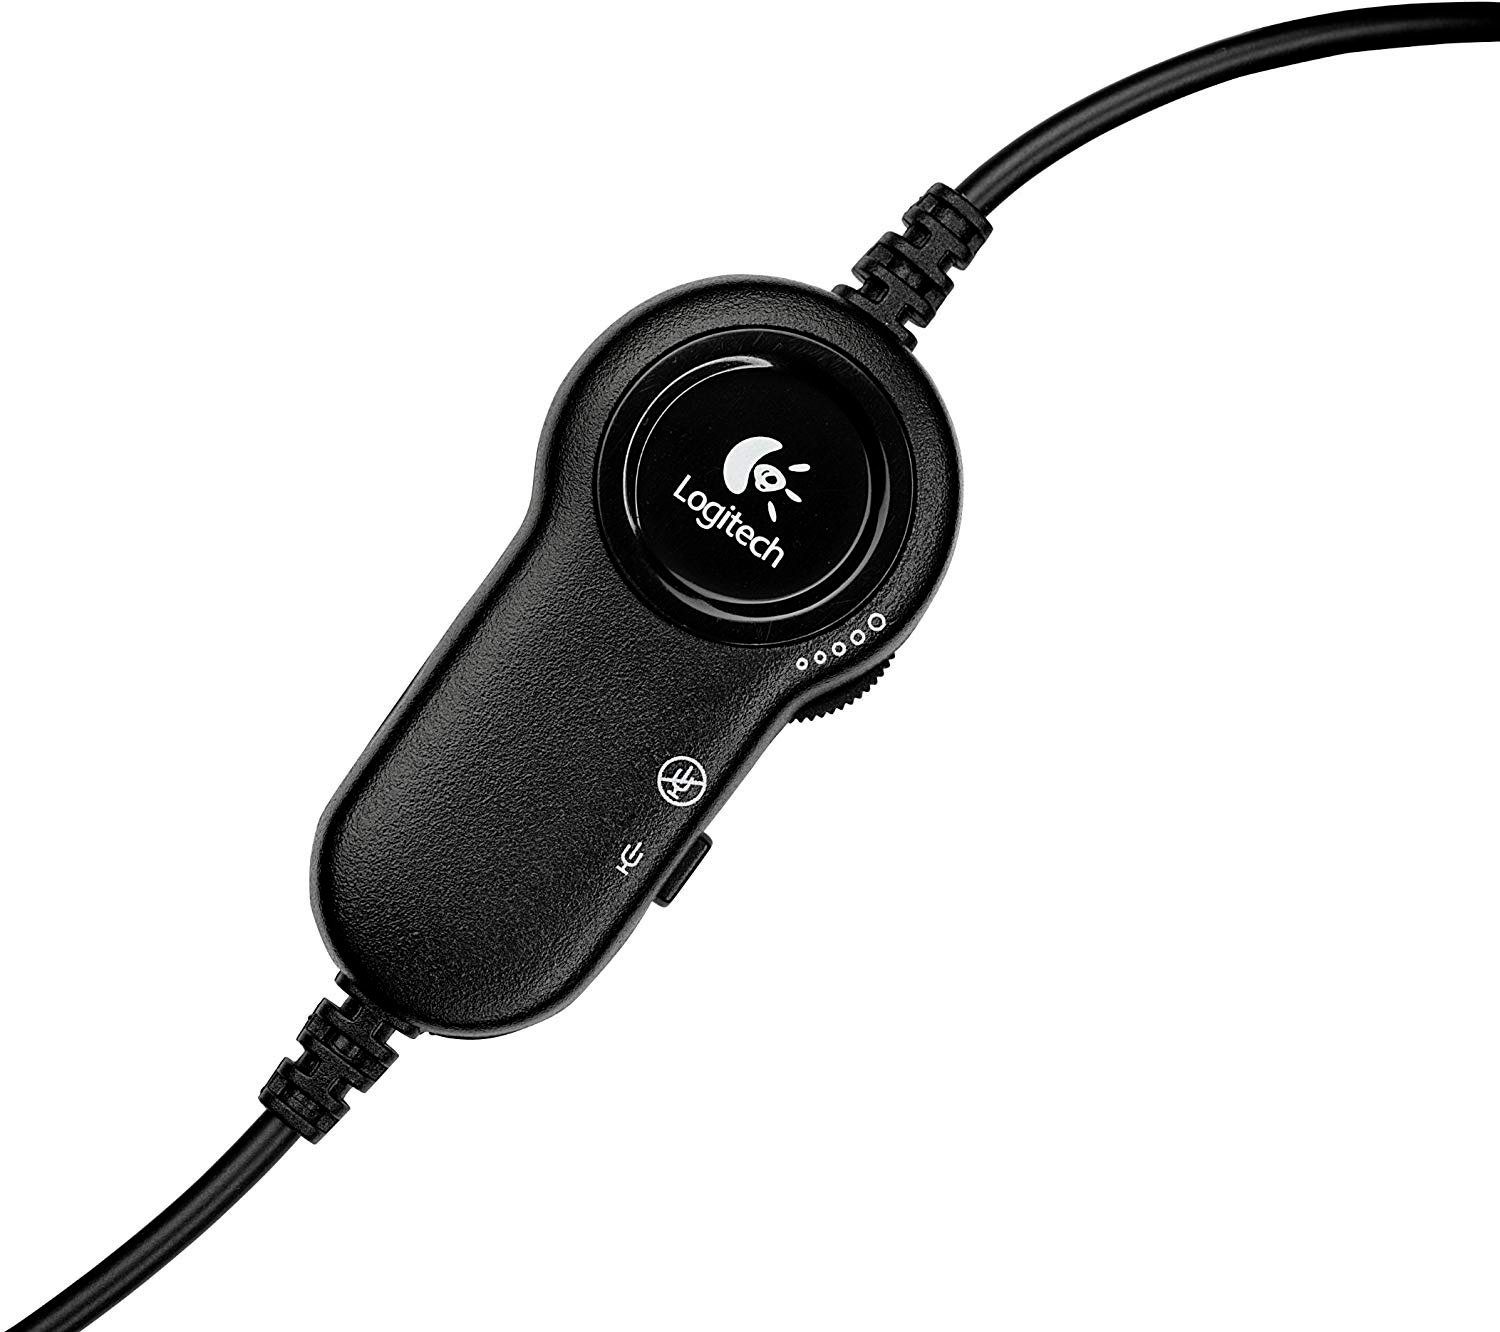 Logitech H150 Stereo Headset Coconut Headset